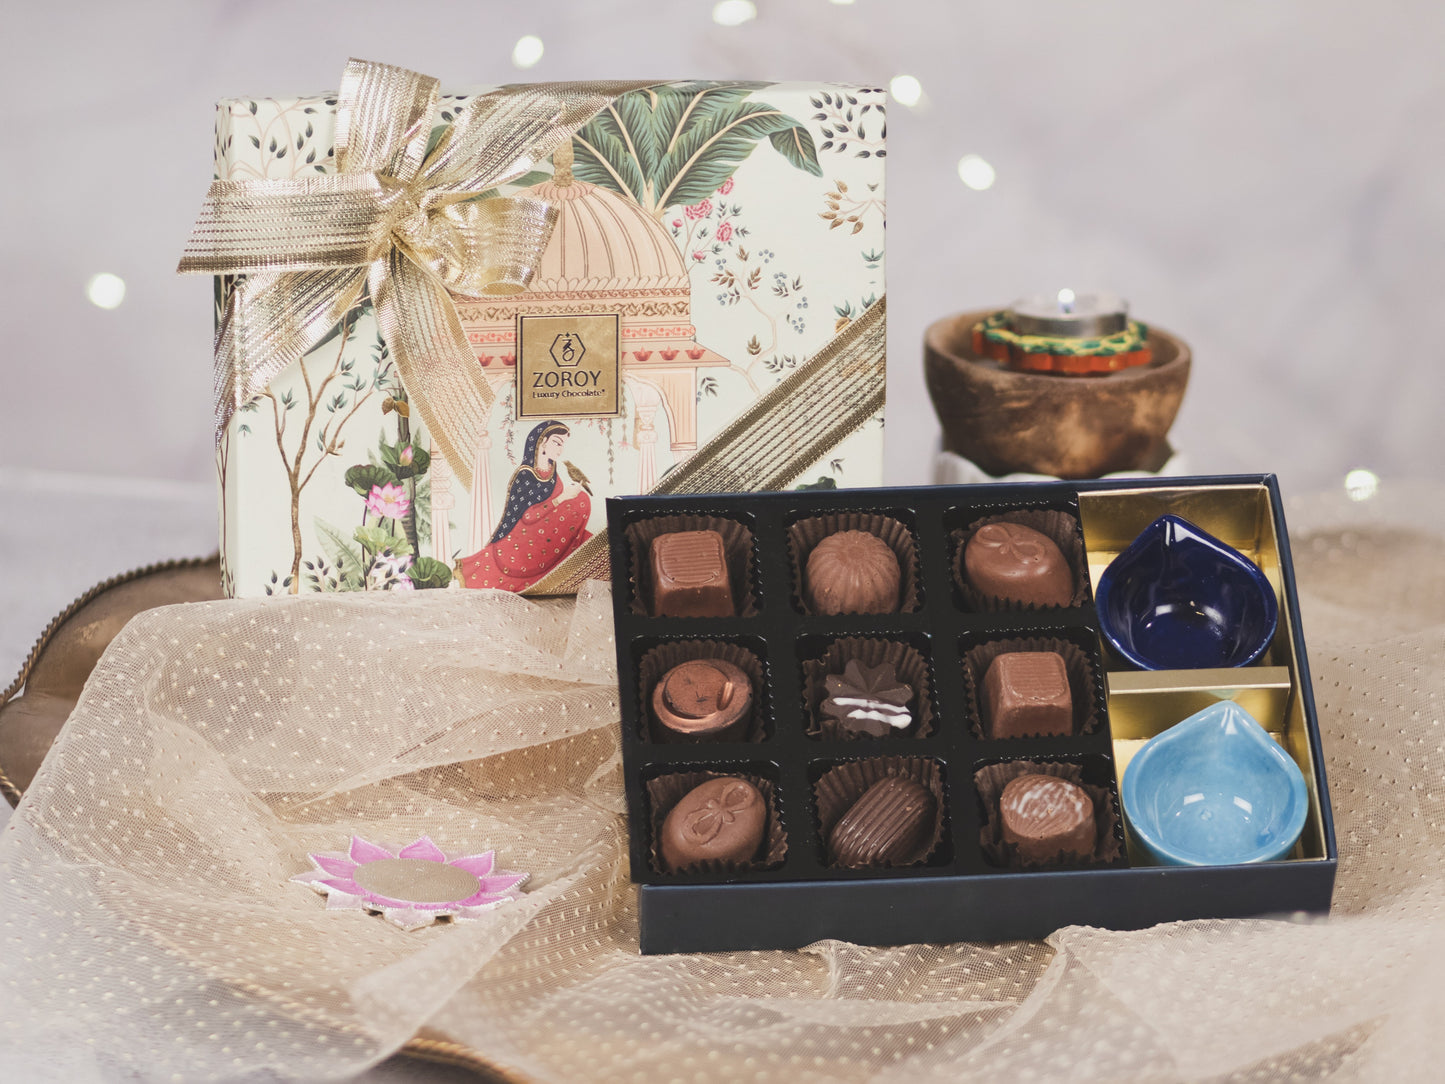 ZOROY Luxury Chocolate Box Of 9 Assorted Milk & Dark Chocolates With 2 Ceramic Diyas Gift Box - 90 Gms For Diwali Deepavali Festive Online Gifts Pack